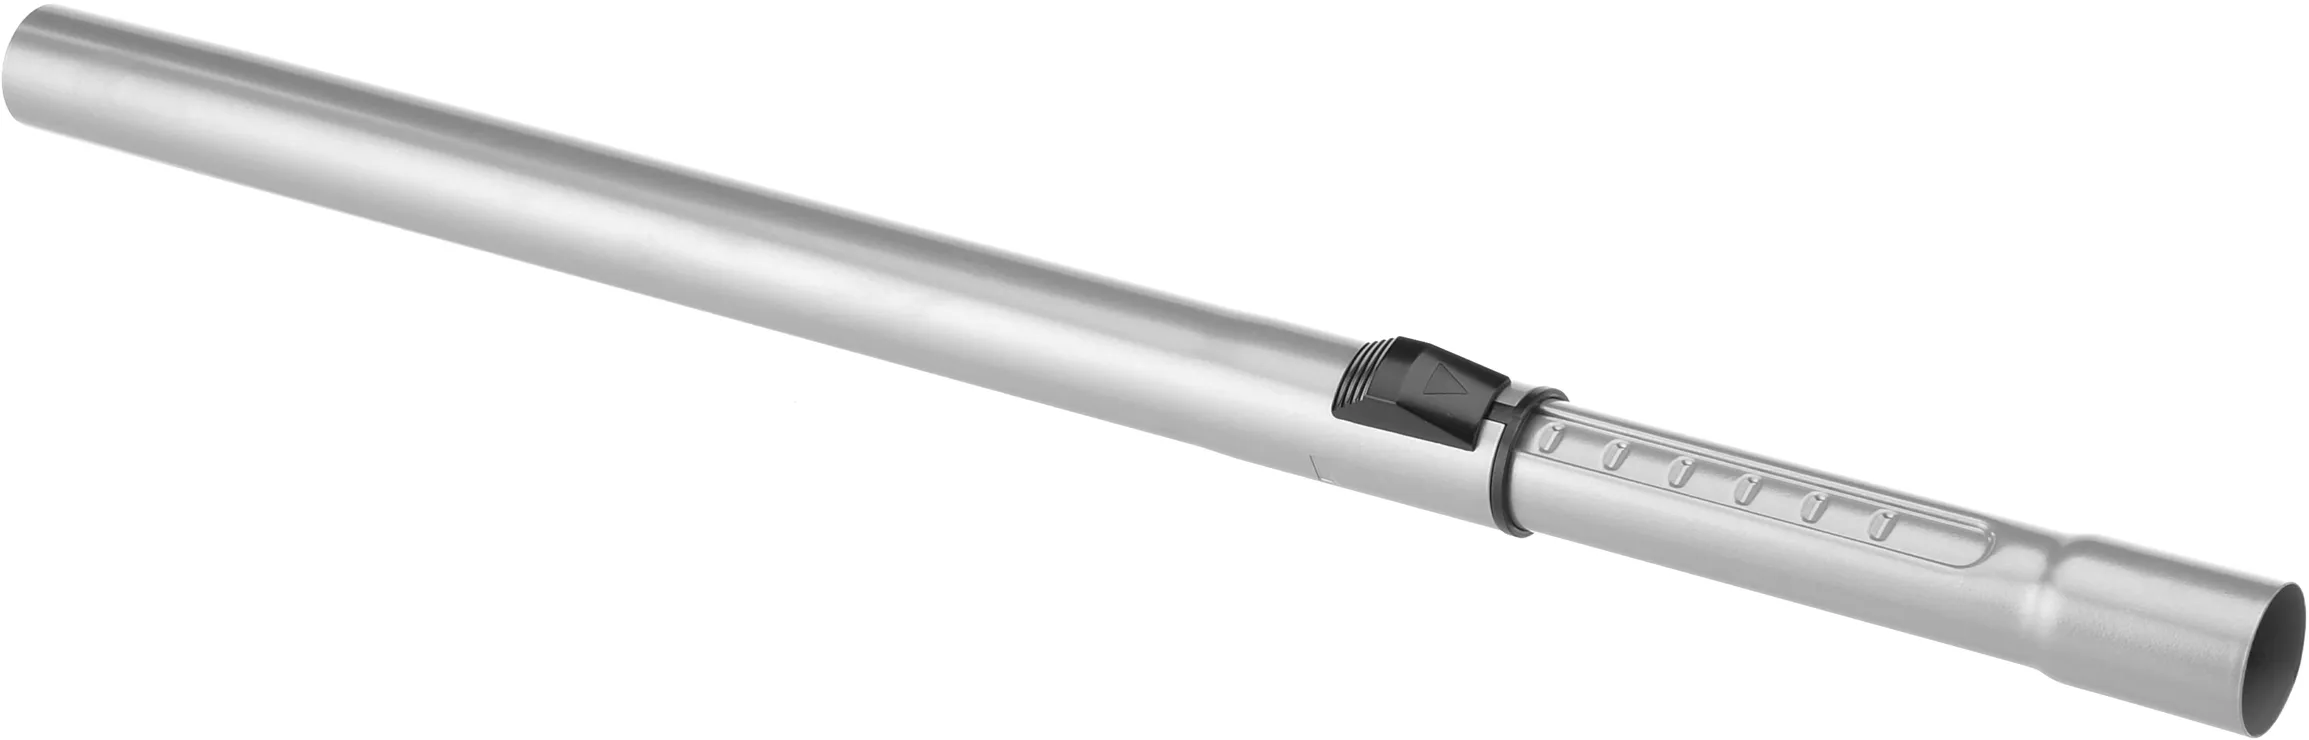 Telescopic tube Tube for vacuum cleaners 